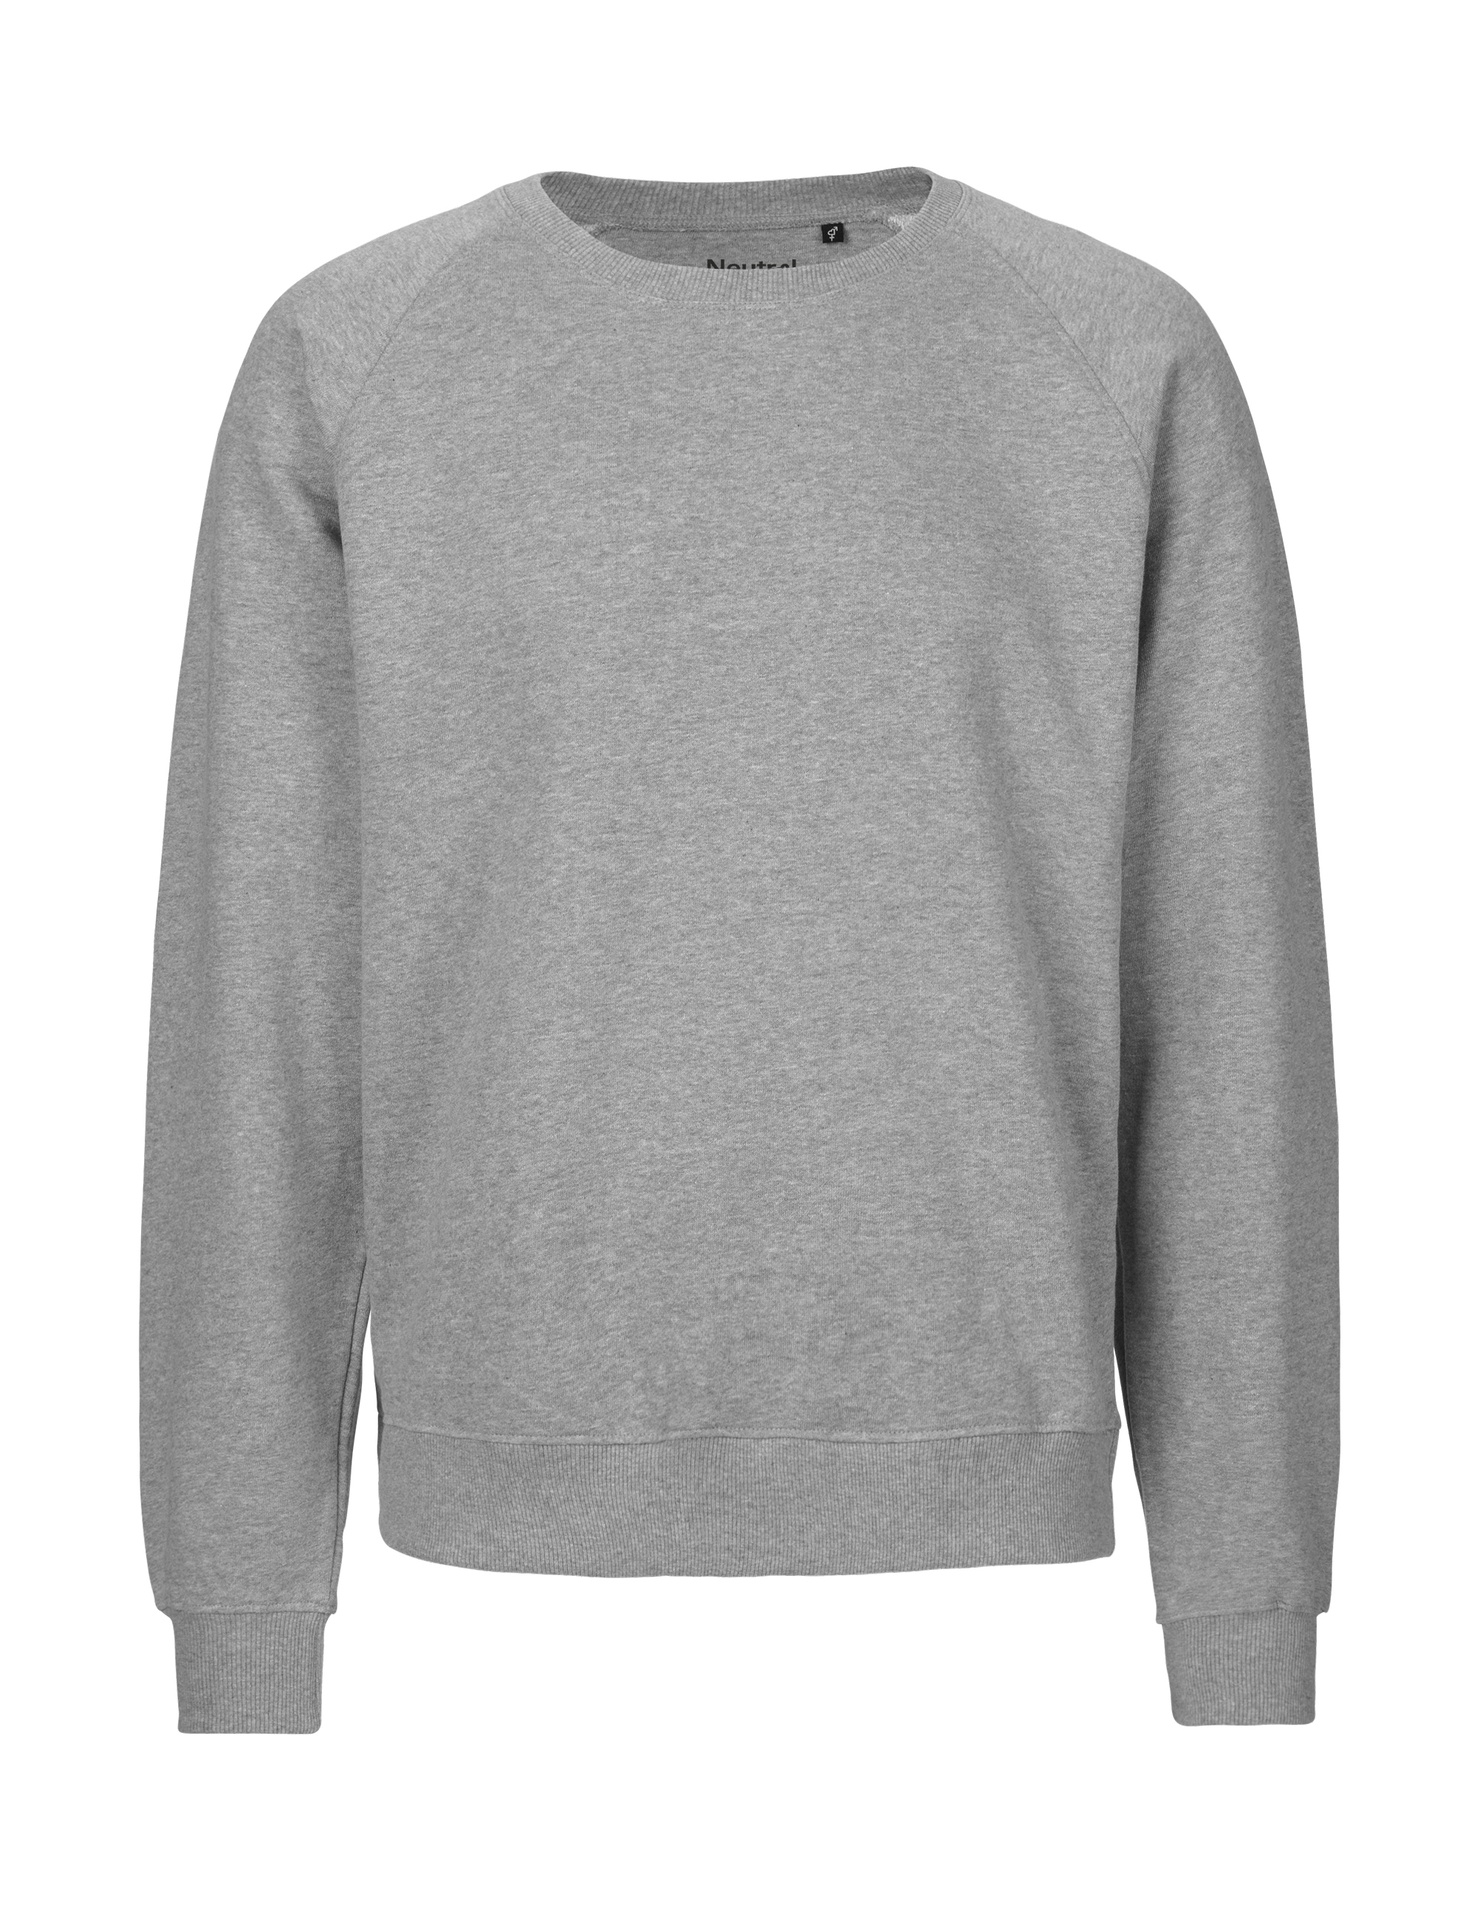 [PR/02745] Unisex Sweatshirt (Sport Grey 21, L)